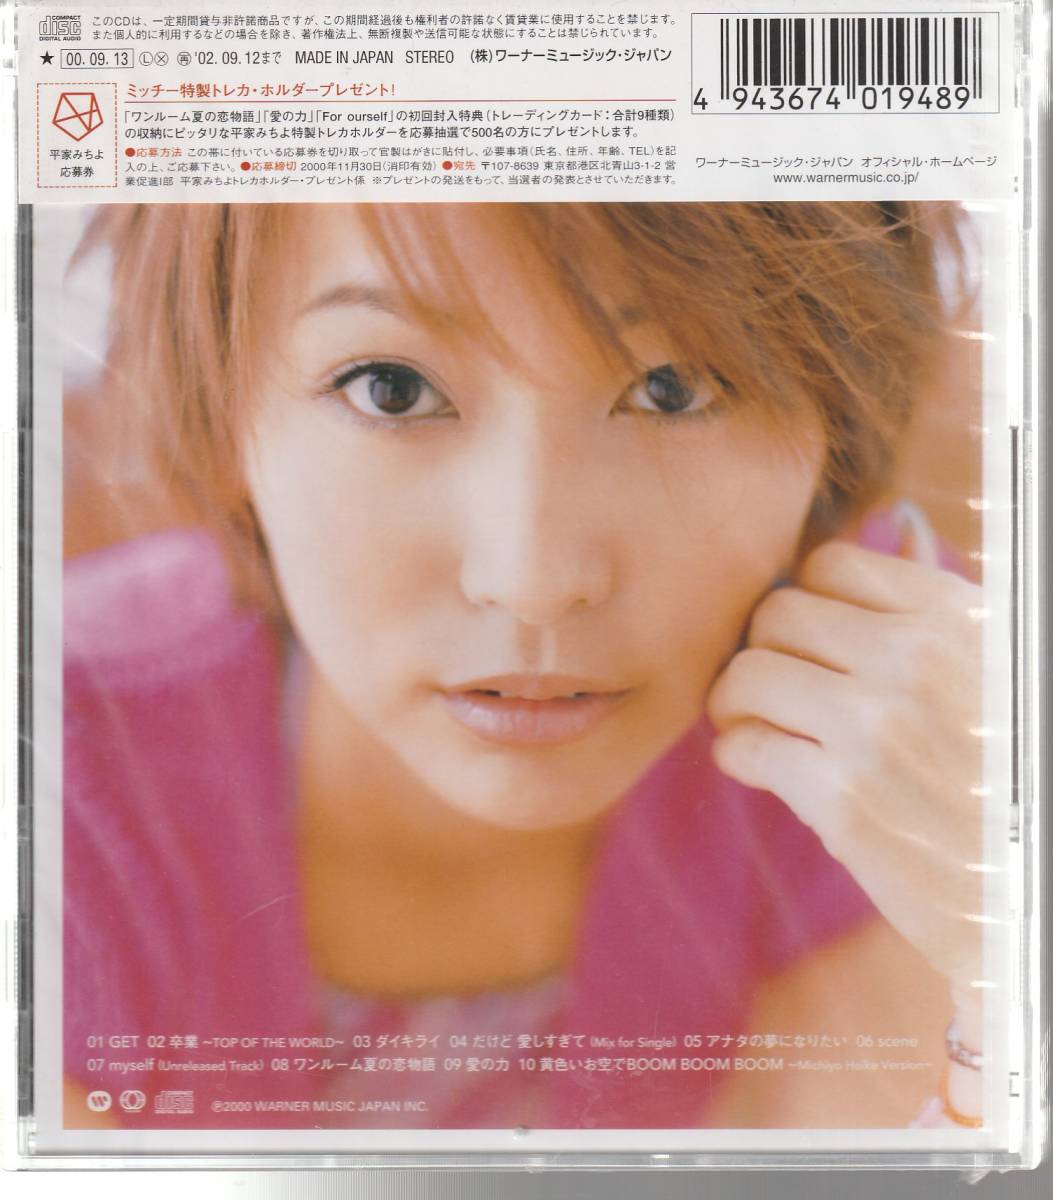  Heike Michiyo san [For ourself-Single History-] CD не использовался * нераспечатанный 